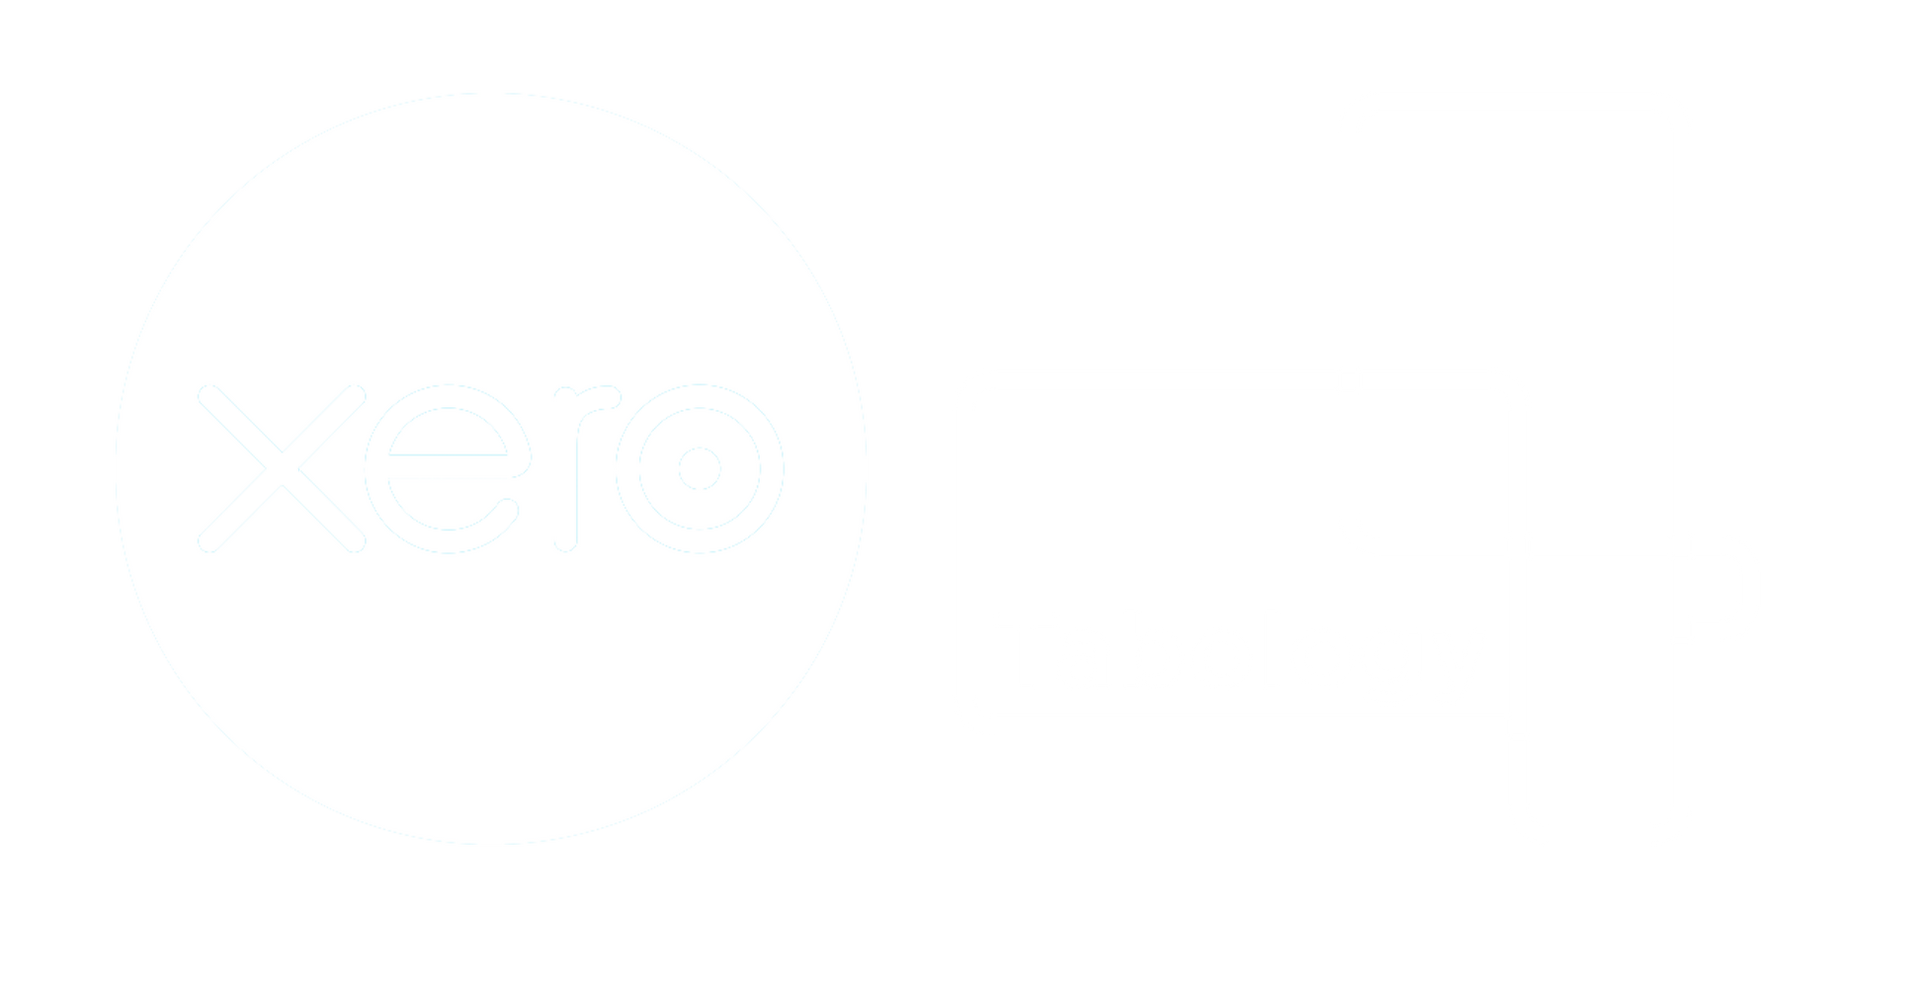 Xero & Tabology logos